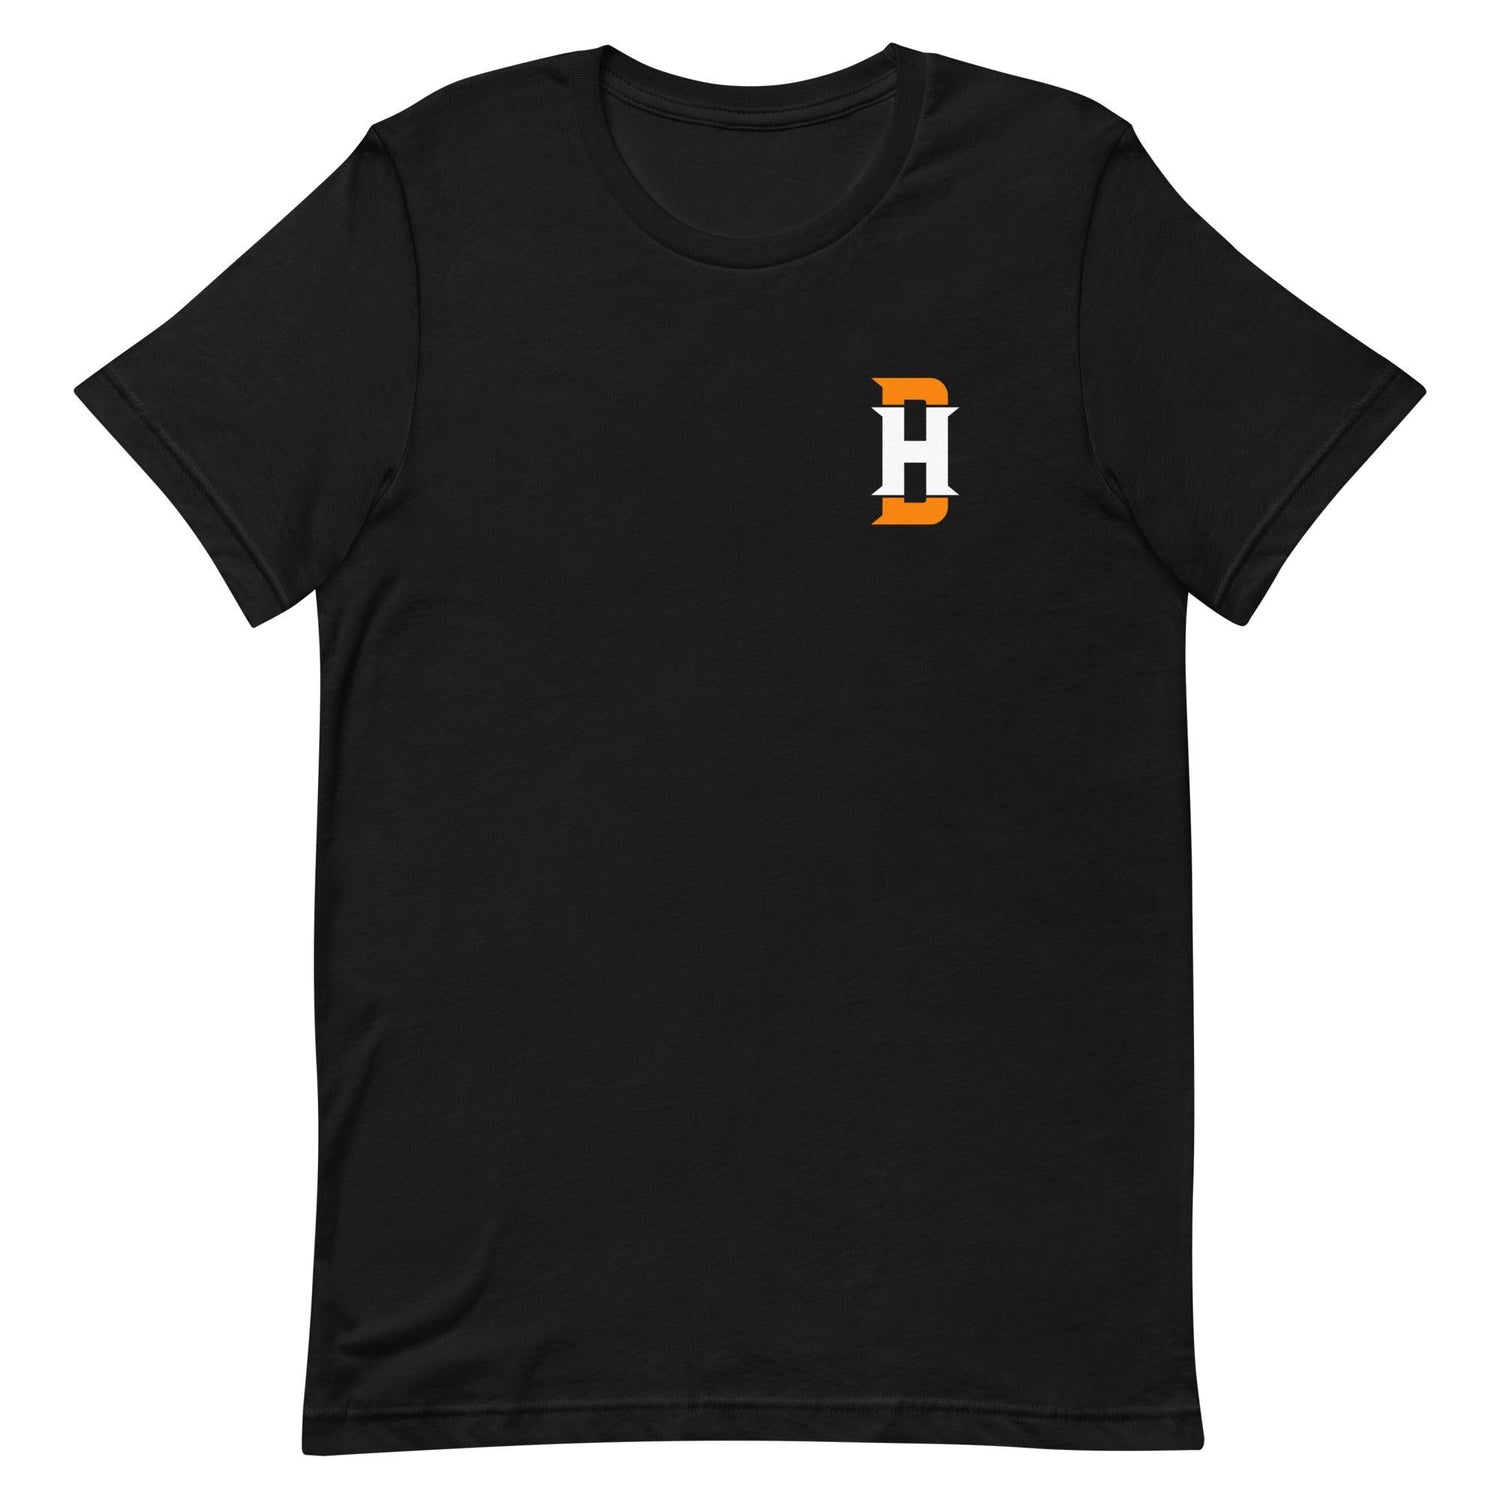 Daevin Hobbs "Essential" t-shirt - Fan Arch